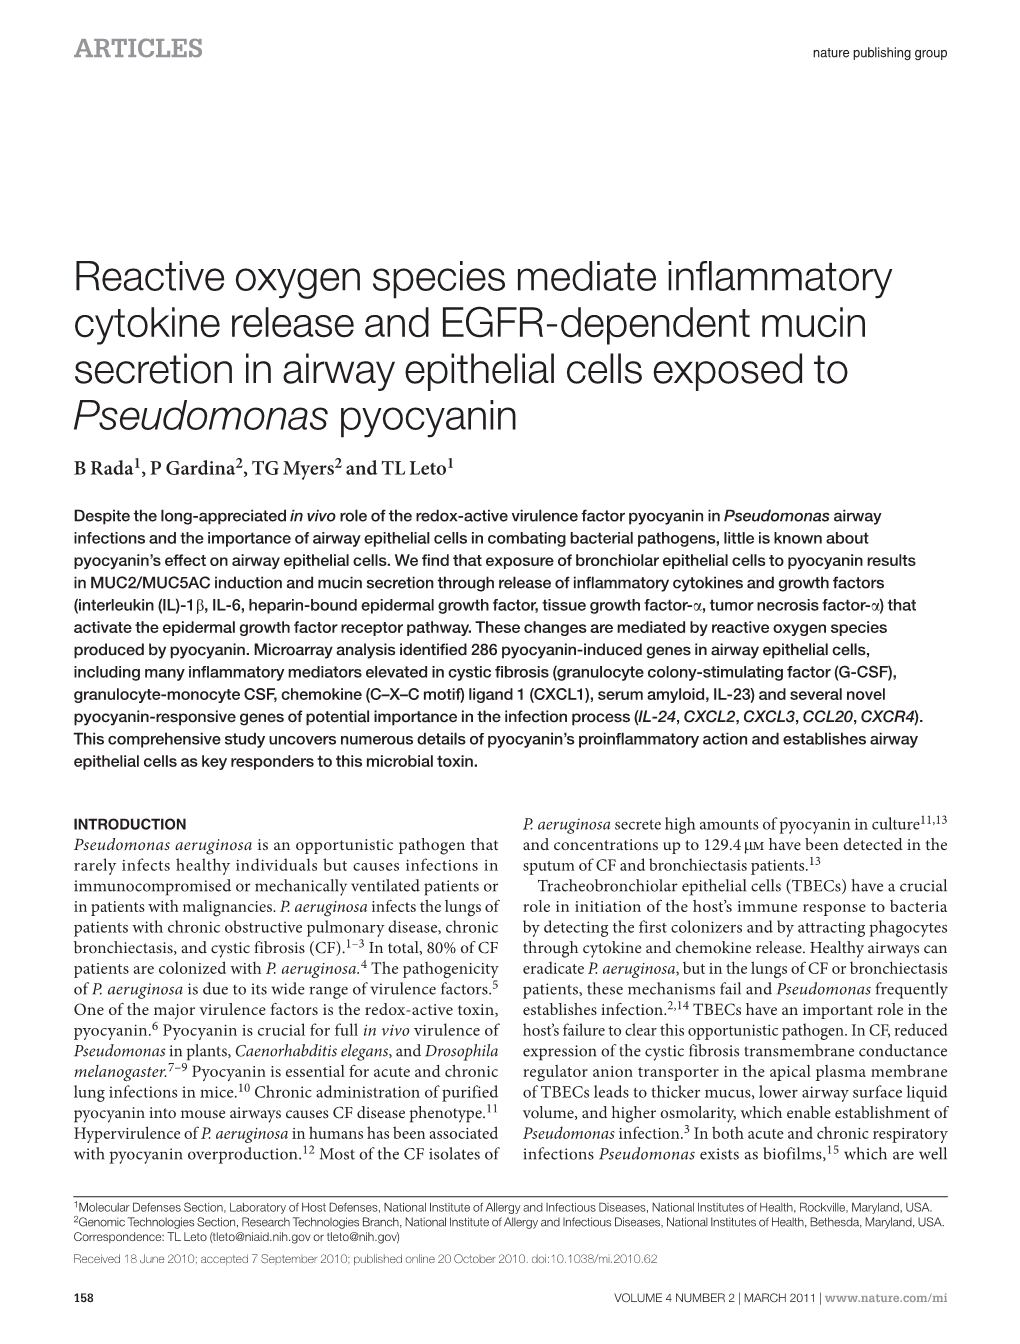 Reactive Oxygen Species Mediate Inflammatory Cytokine Release and EGFR-Dependent Mucin Secretion in Airway Epithelial Cells Exposed to Pseudomonas Pyocyanin